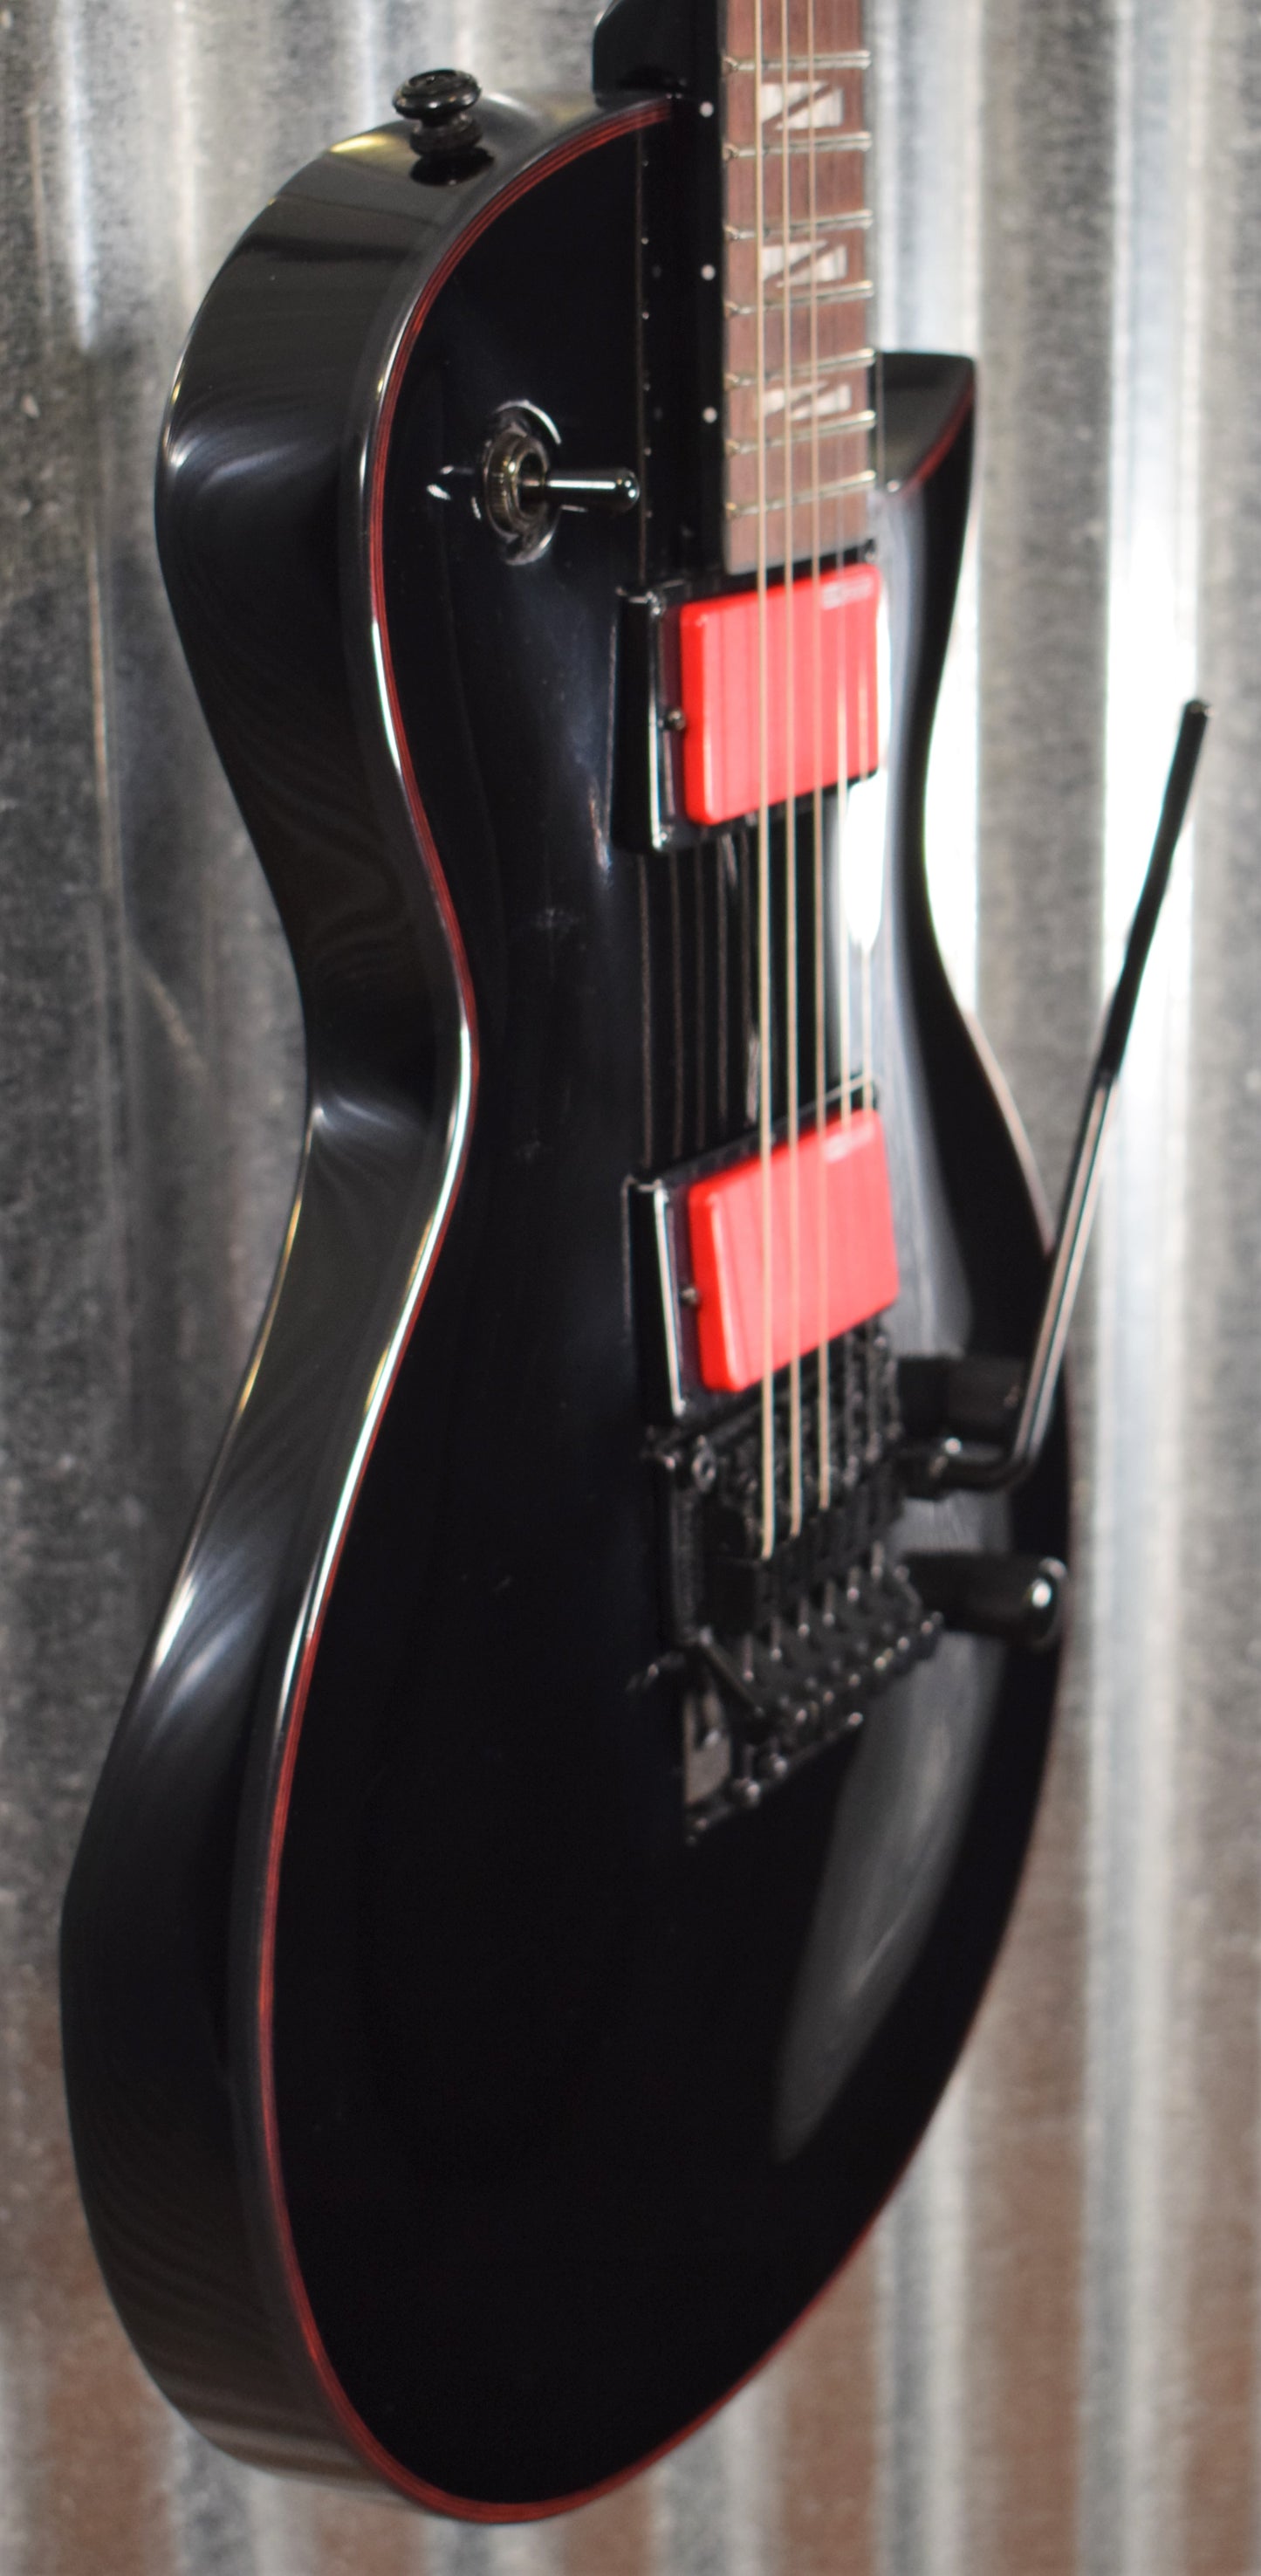 ESP LTD GH-200 Gary Holt Signature Gloss Black Guitar LGH200BLK #1560 B Stock